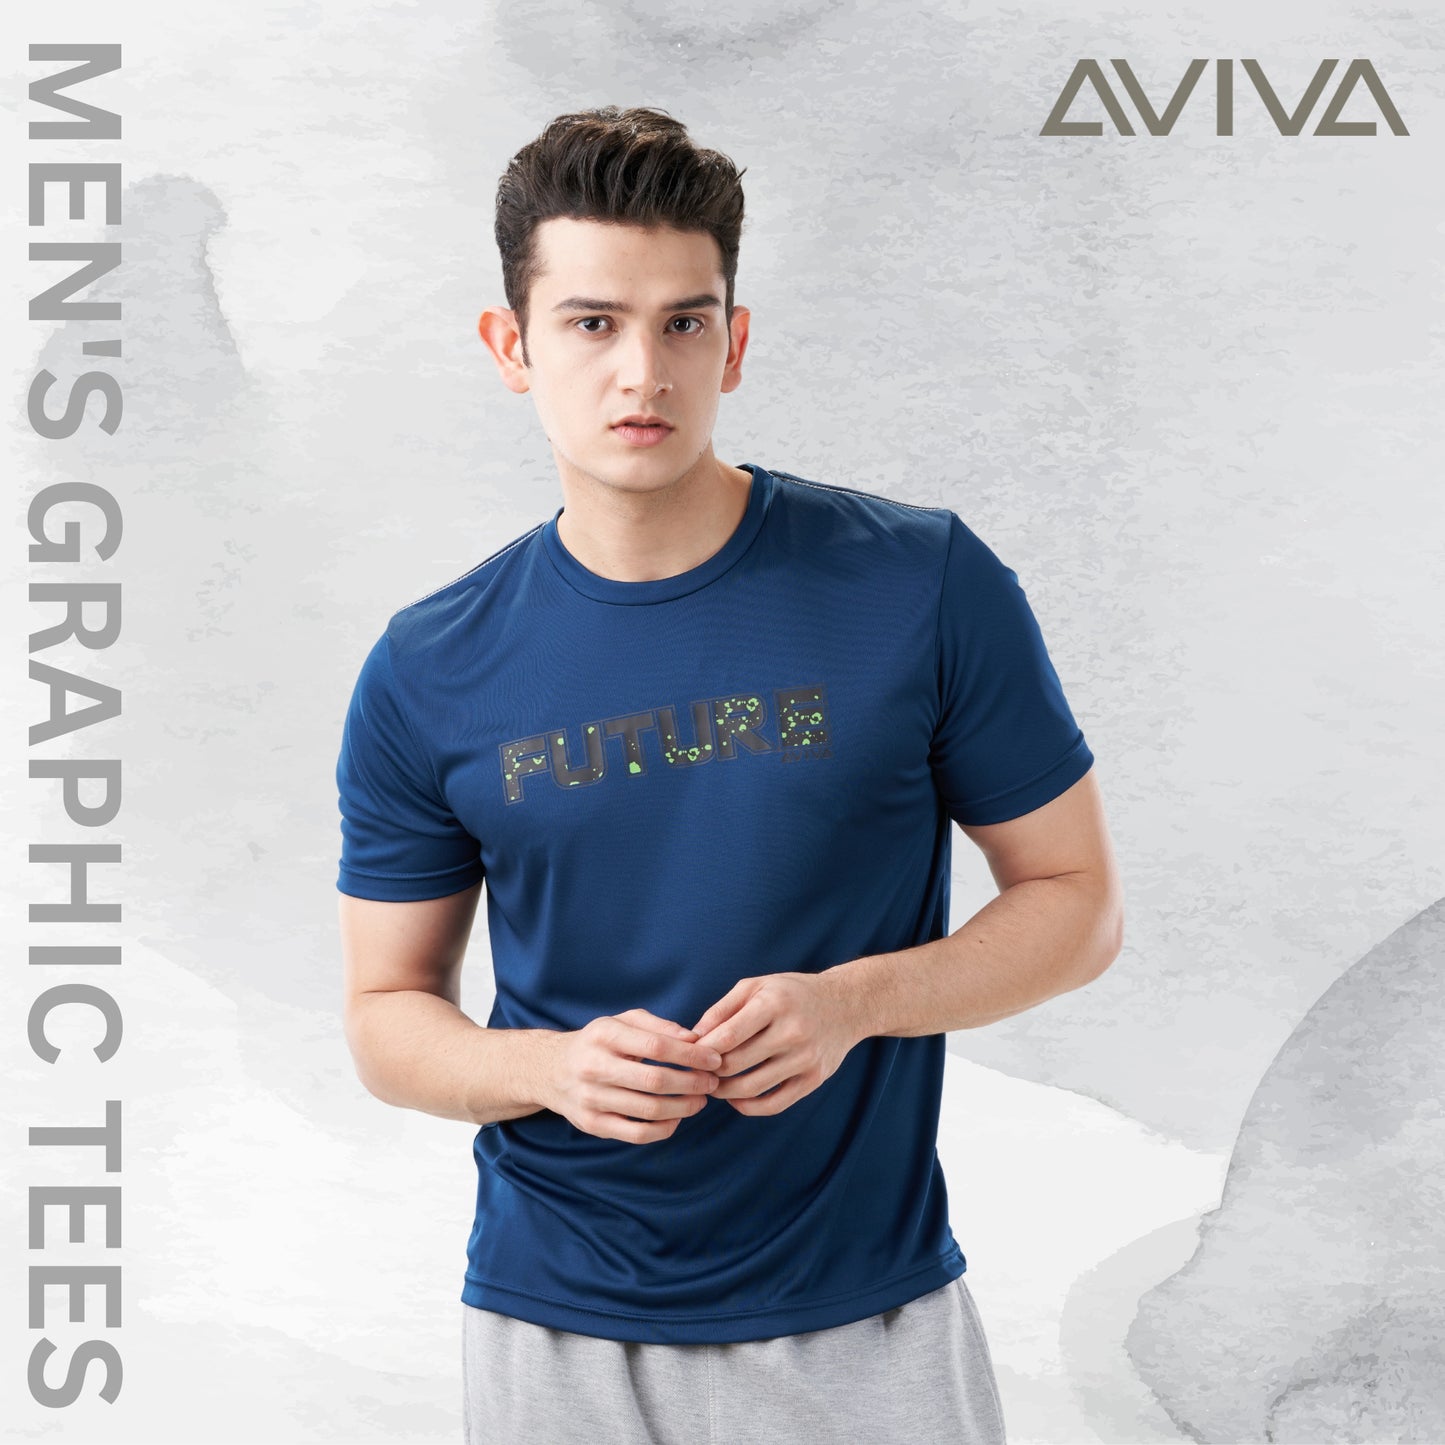 AVIVA Men's Graphic Short Sleeve Tee (91-8050)